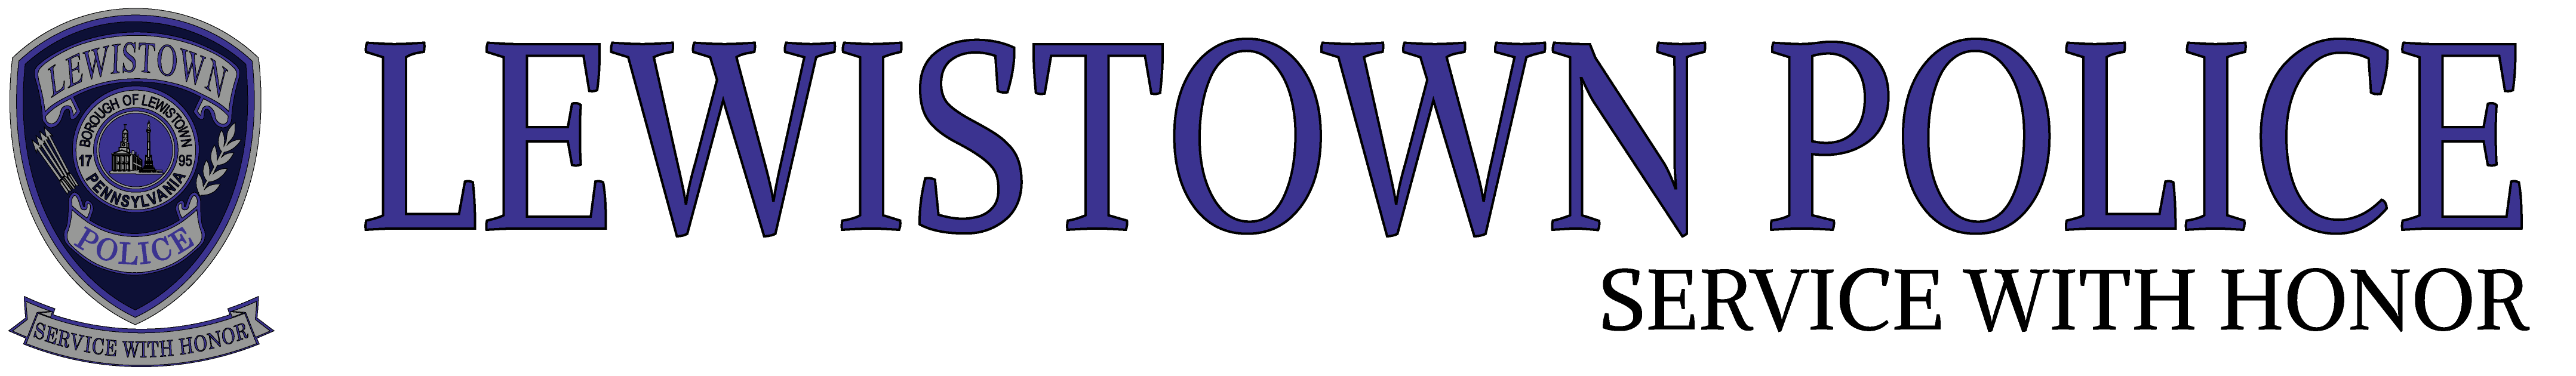 Lewistown Police Department